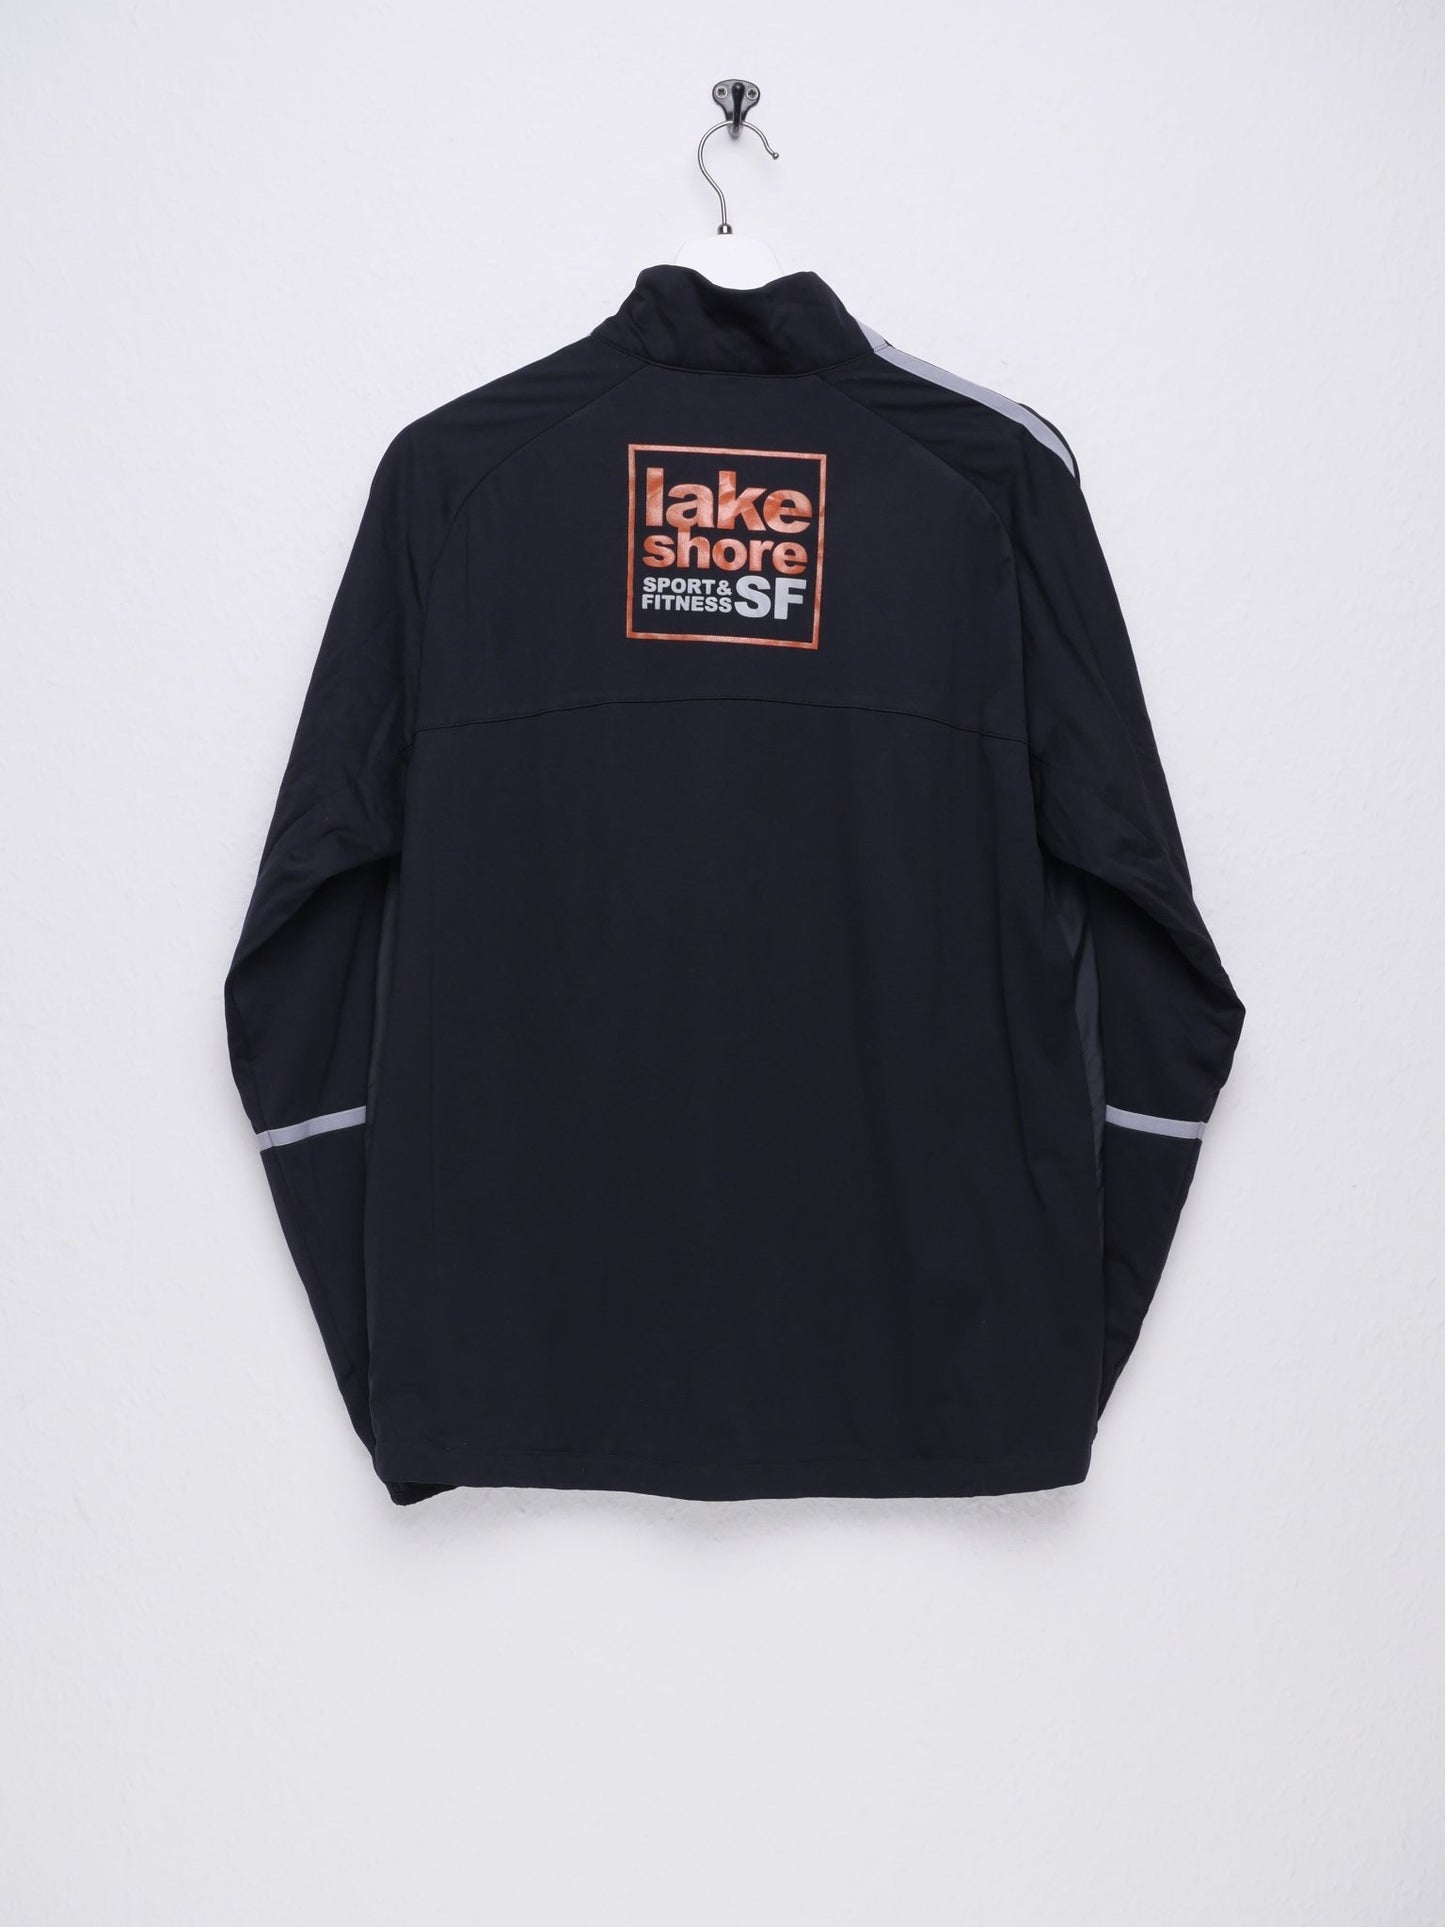 nike printed Logo Vintage Track Jacket - Peeces